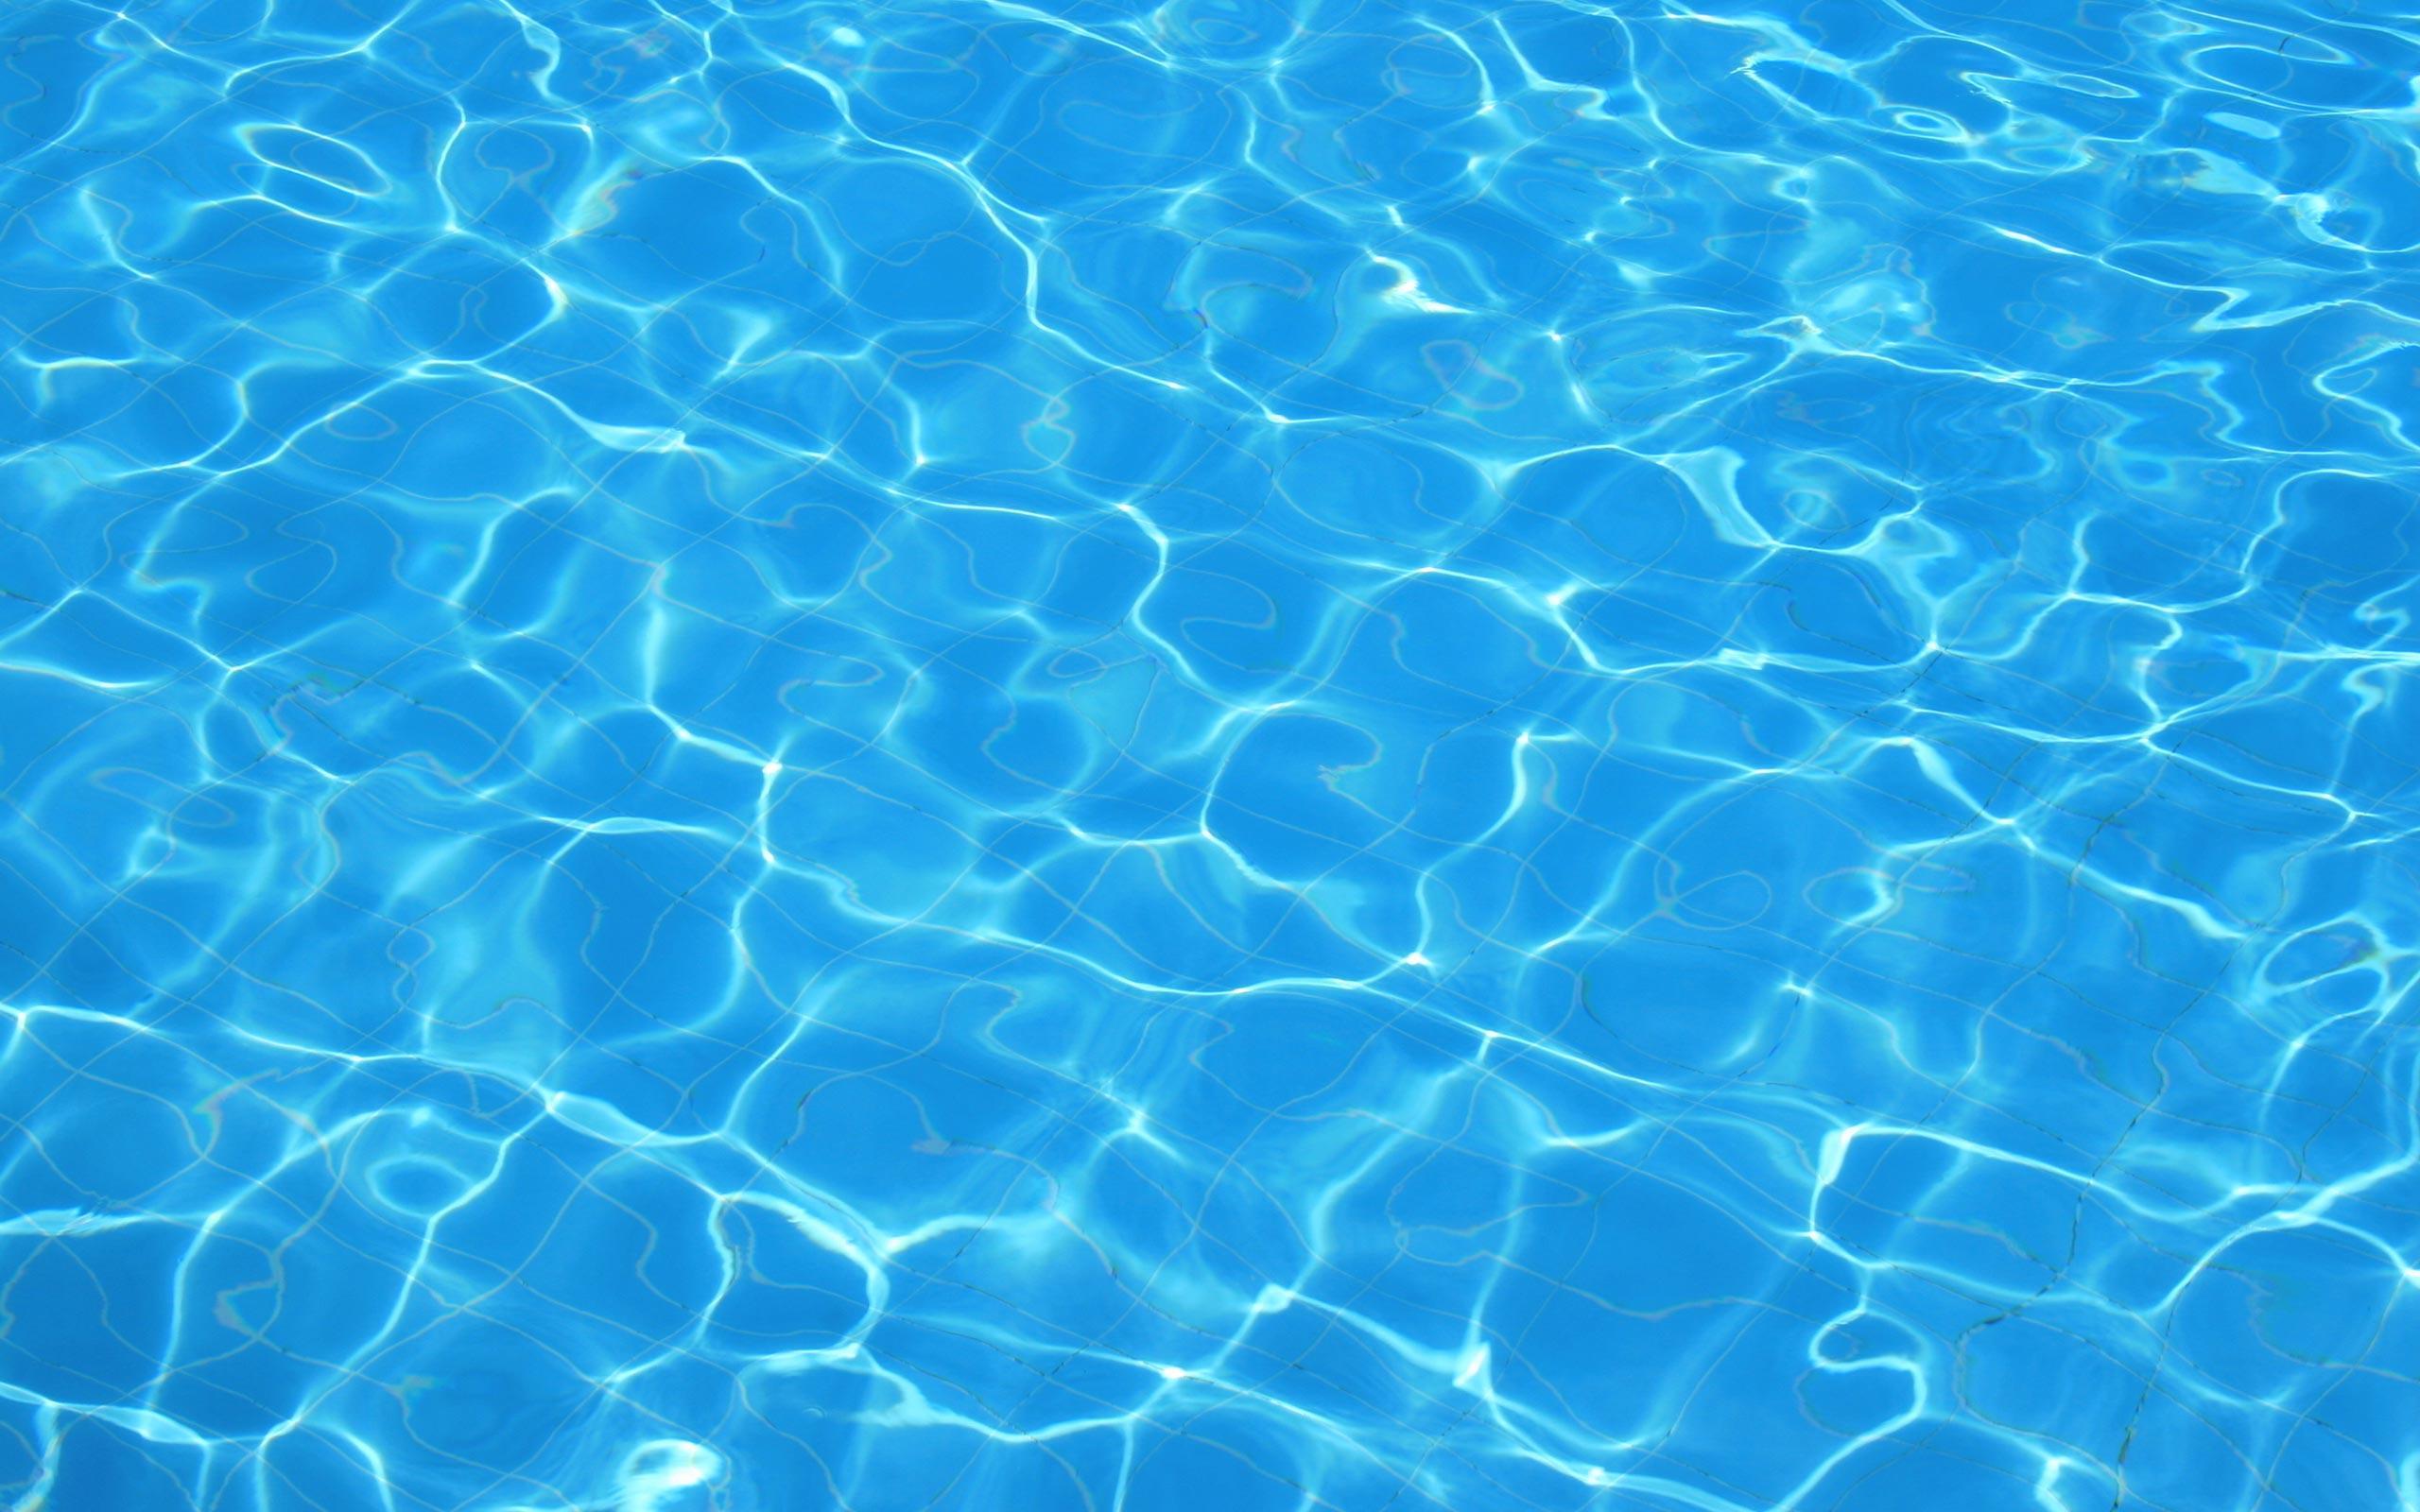 Blue Water Desktop Wallpaper. Blue Water Image